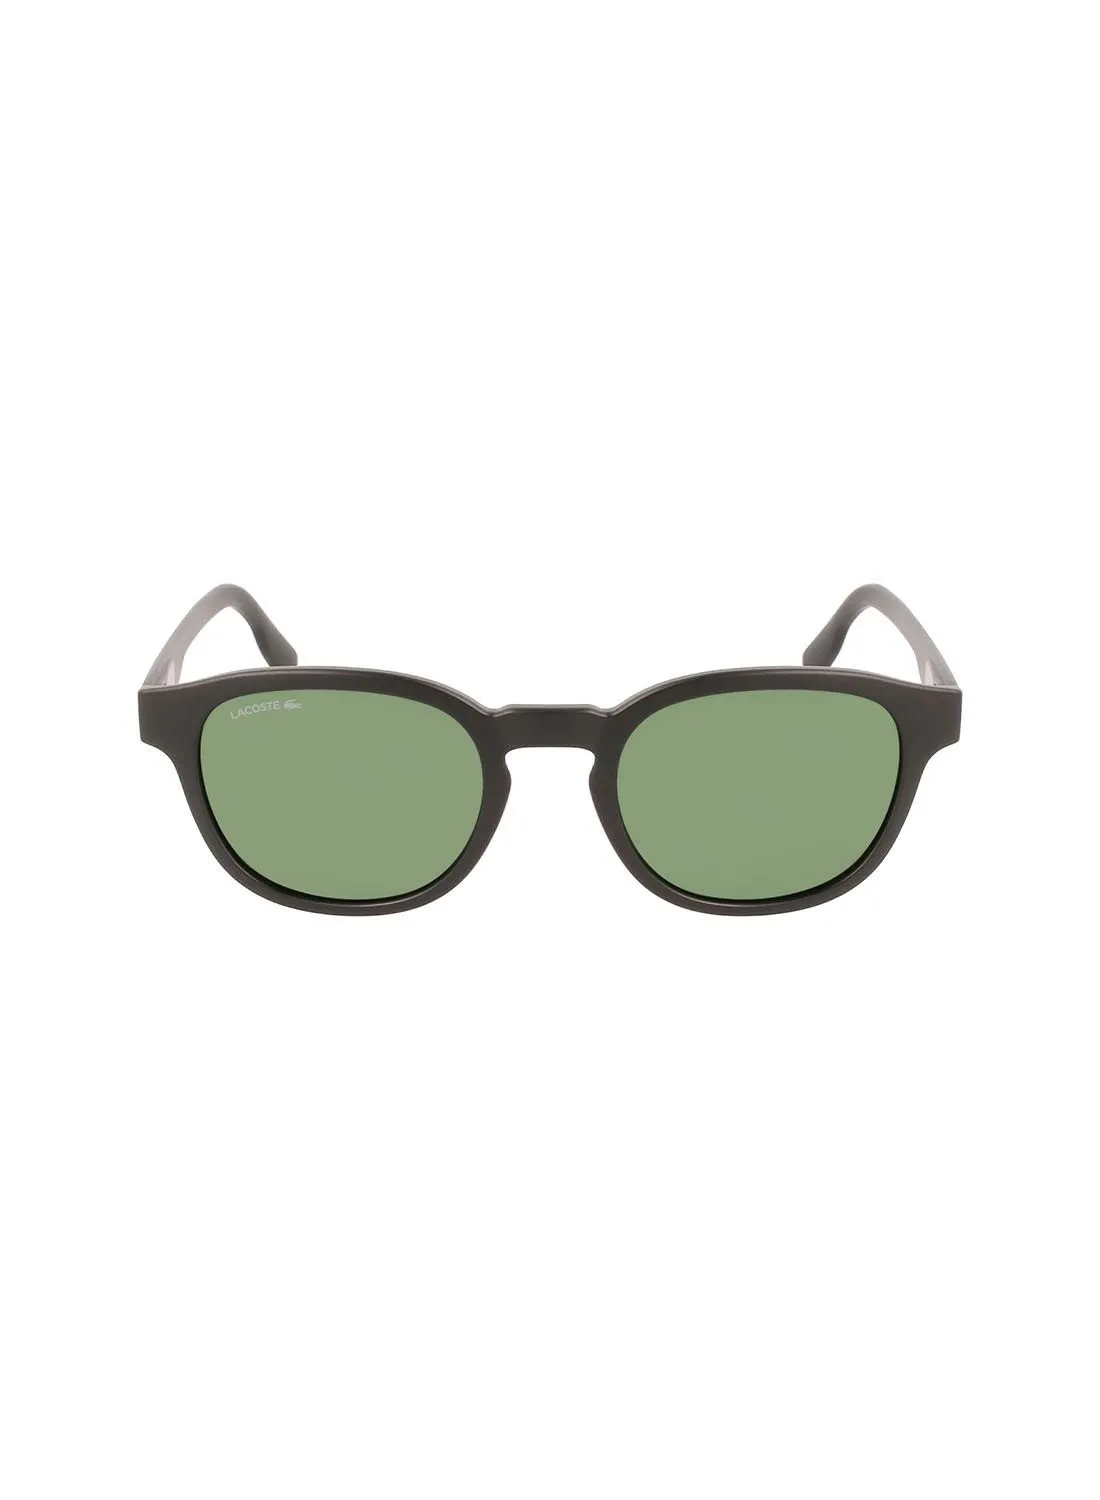 LACOSTE UV Rays Protection Eyewear Sunglasses L968S-002-5121